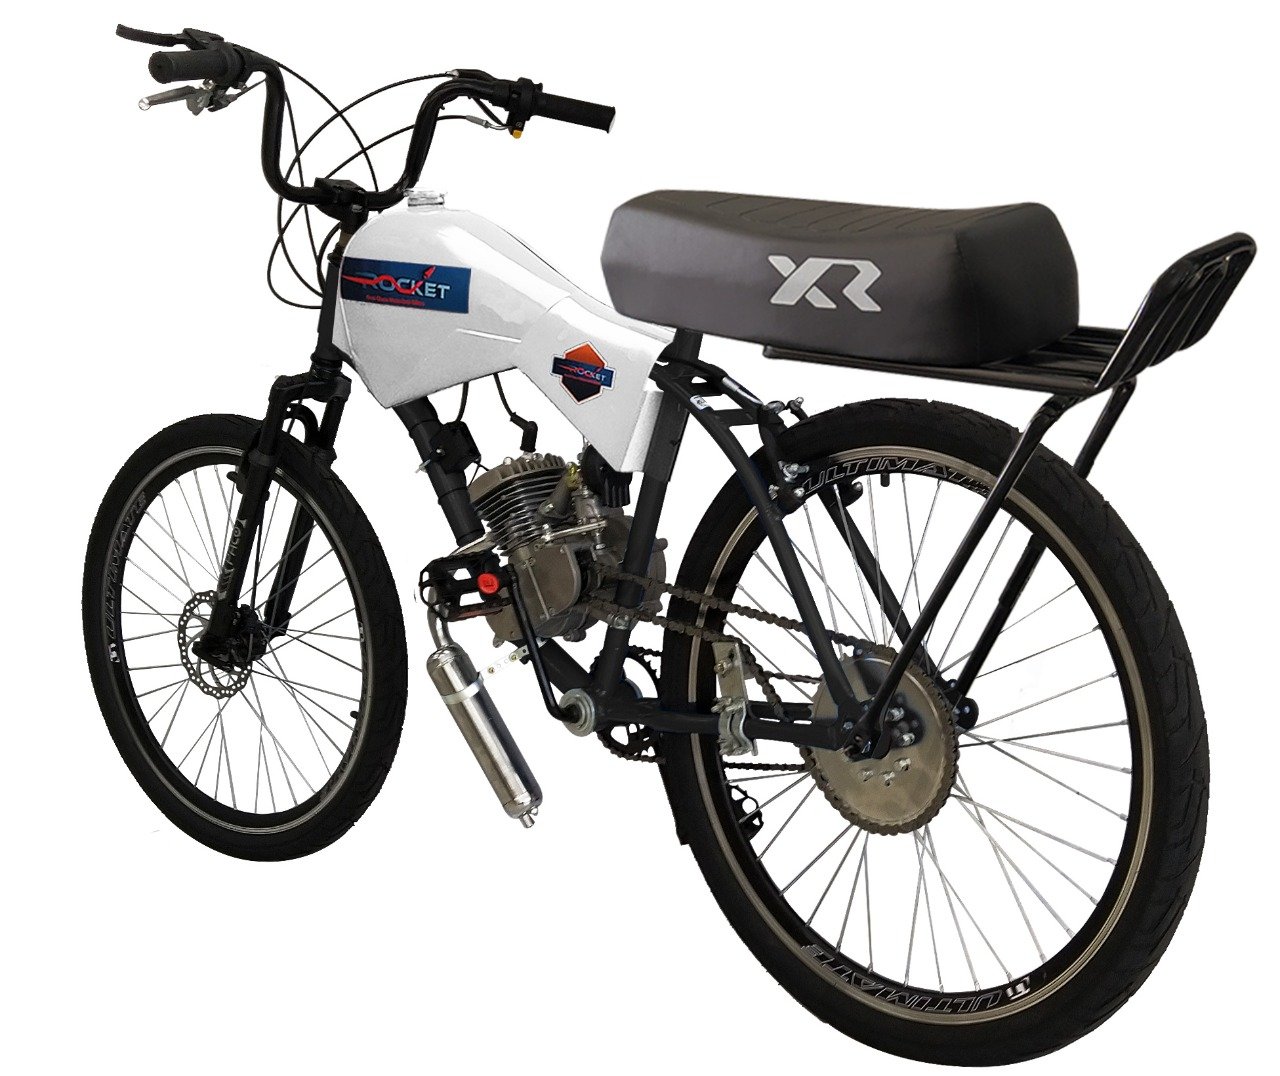 Bicicleta Motorizada 80cc Fr Disc/Susp com Carenagem Banco XR Rocket - 3